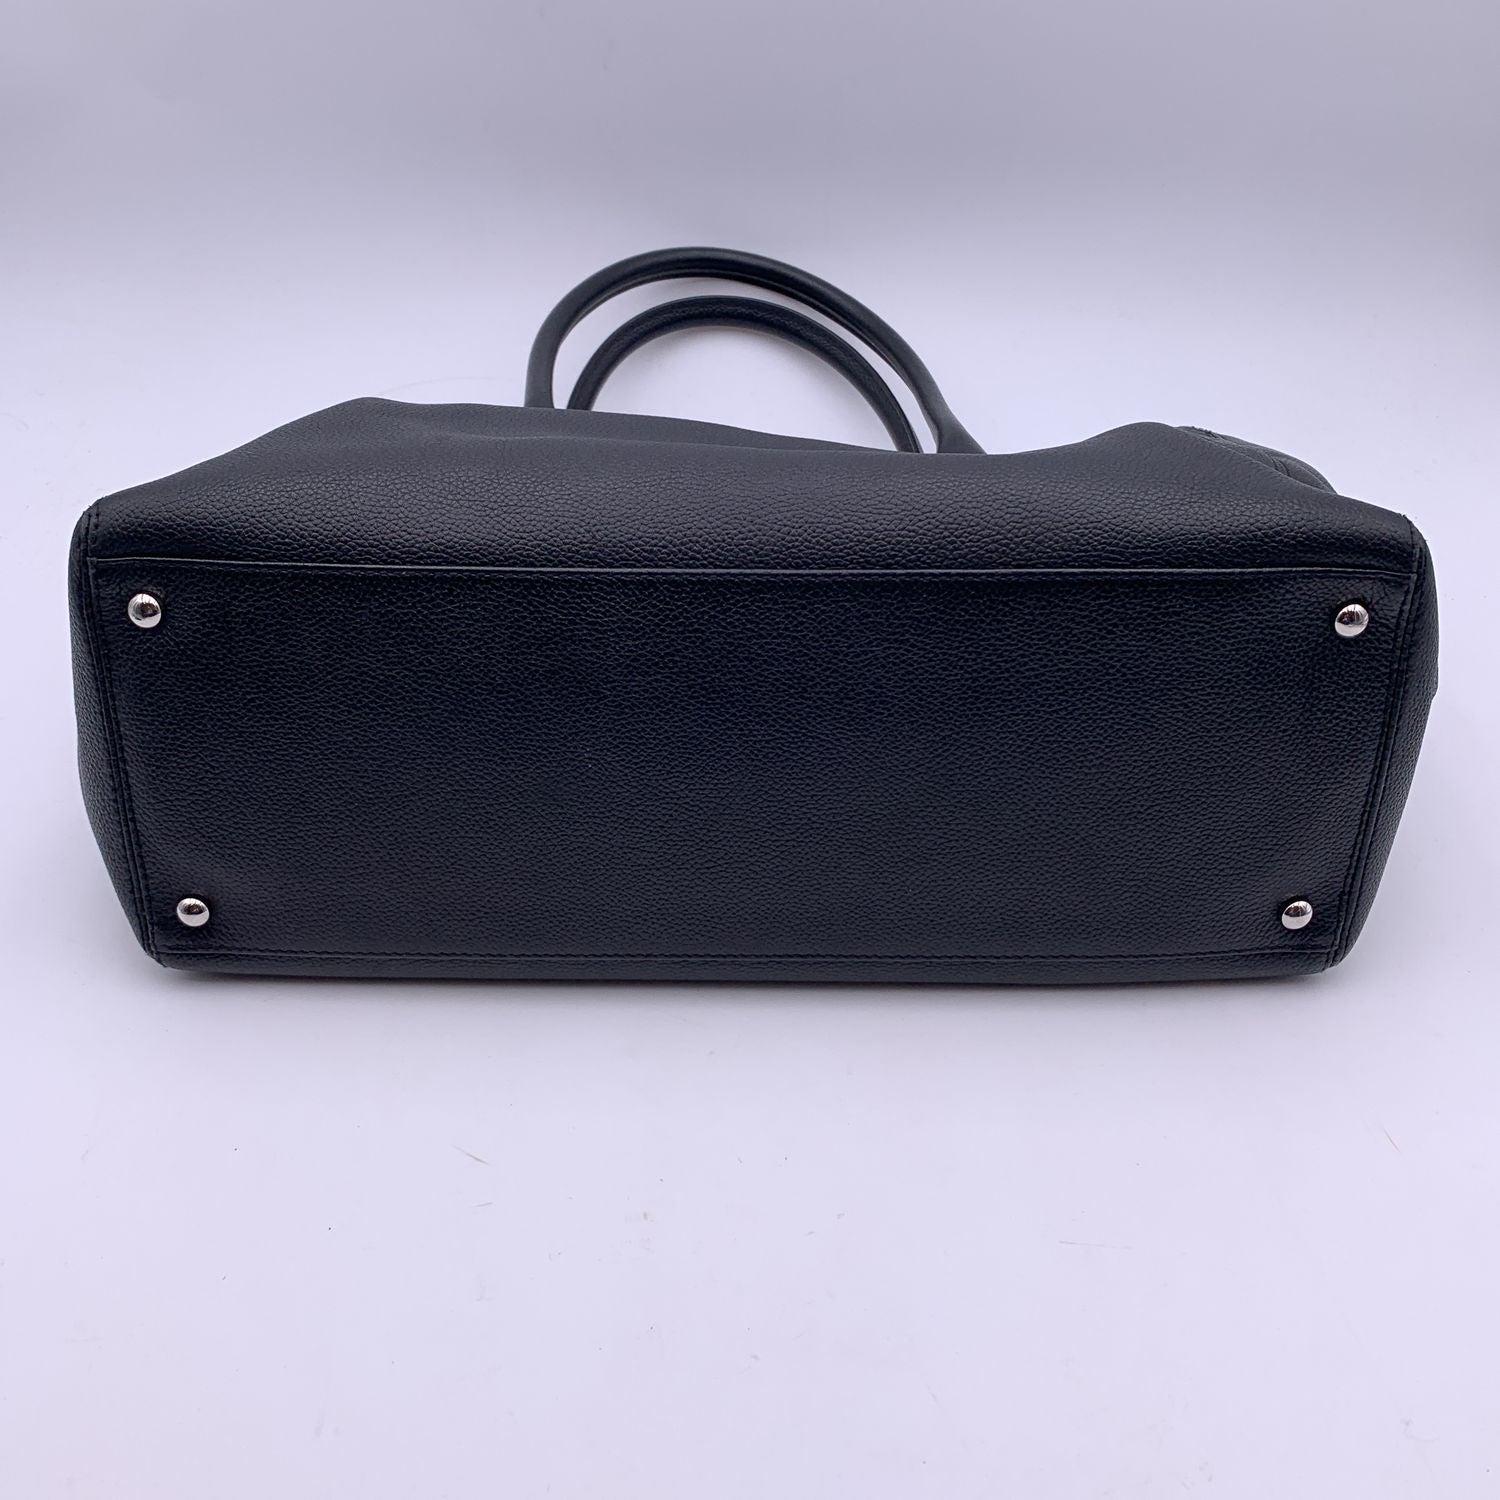 Chanel Black Pebbled Leather Executive Tote Bag Handbag 2000s 3